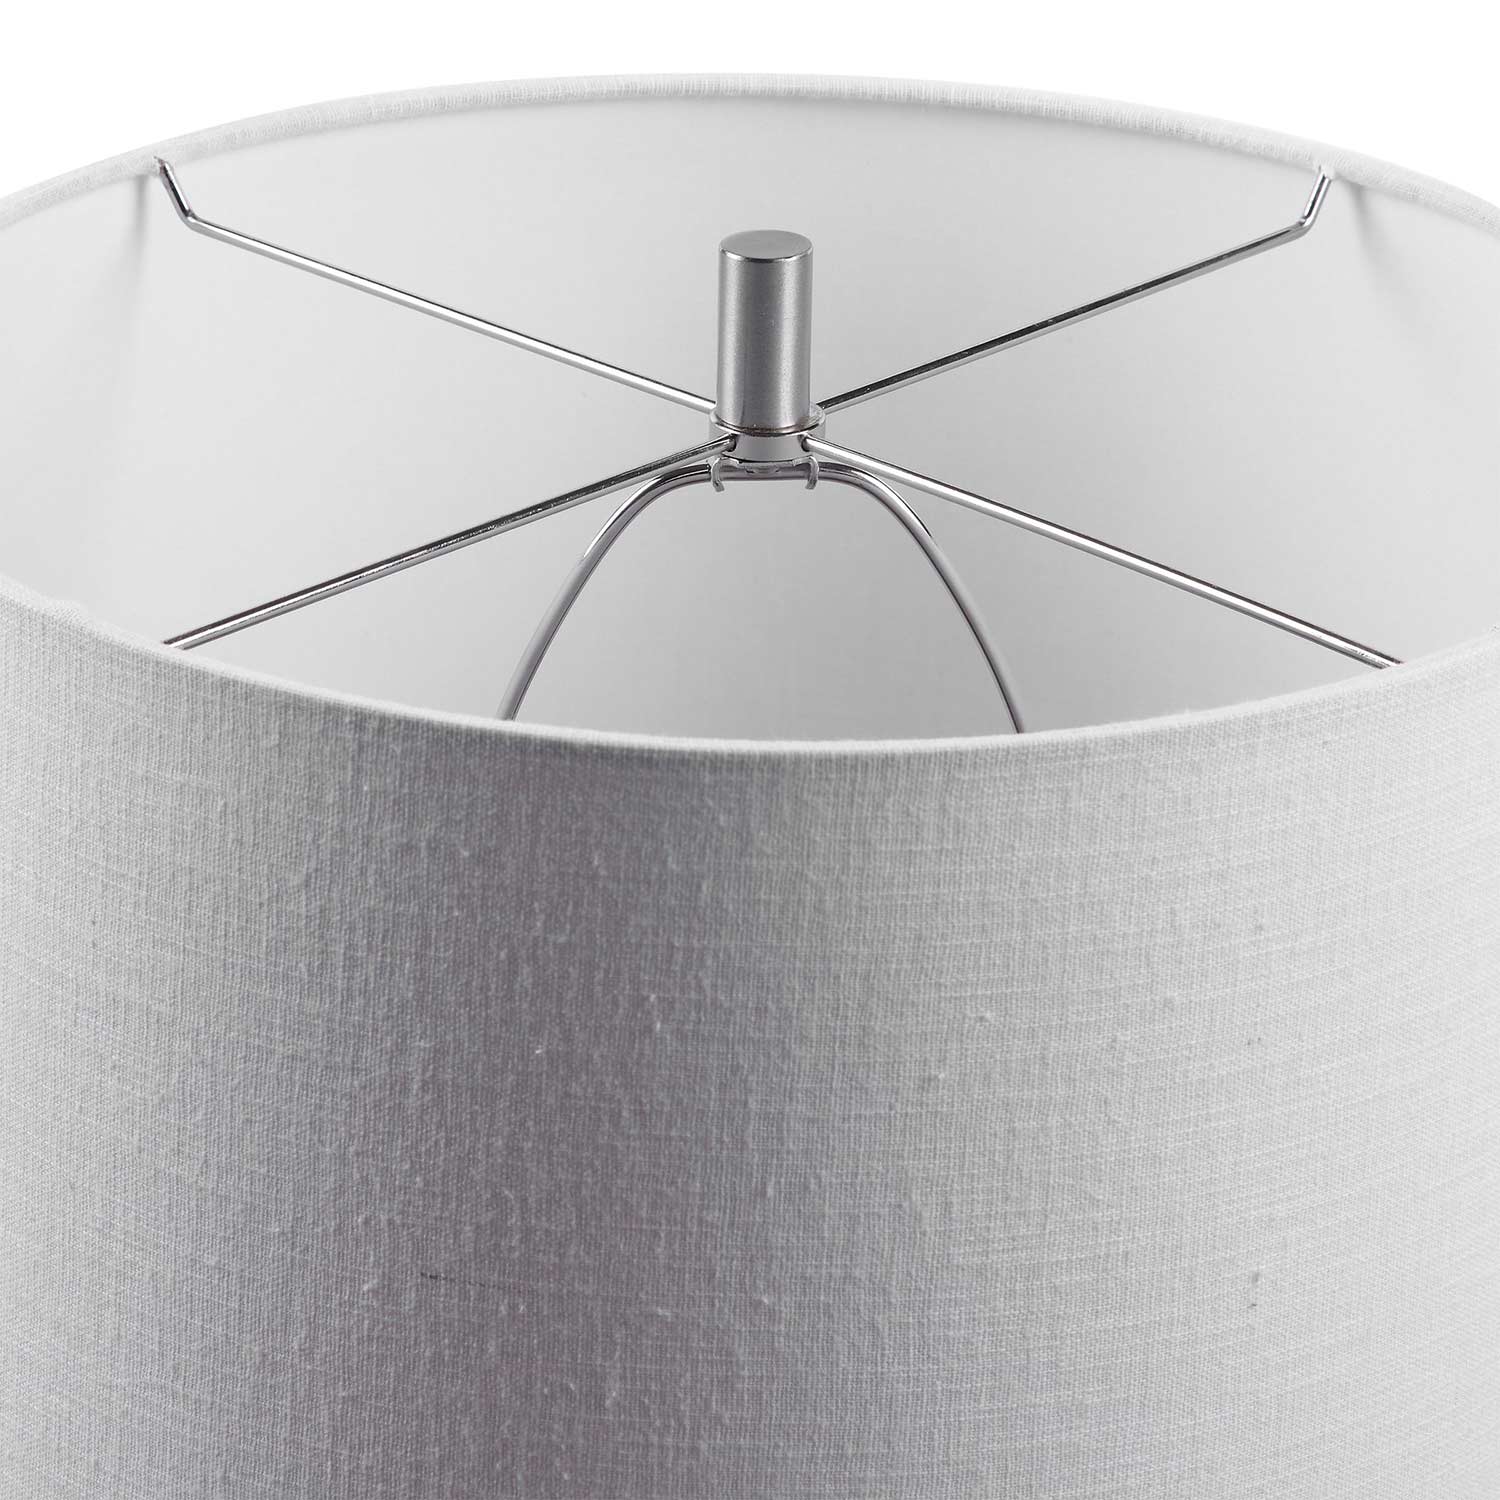 Uttermost Alenon Table Lamp - Light Gray